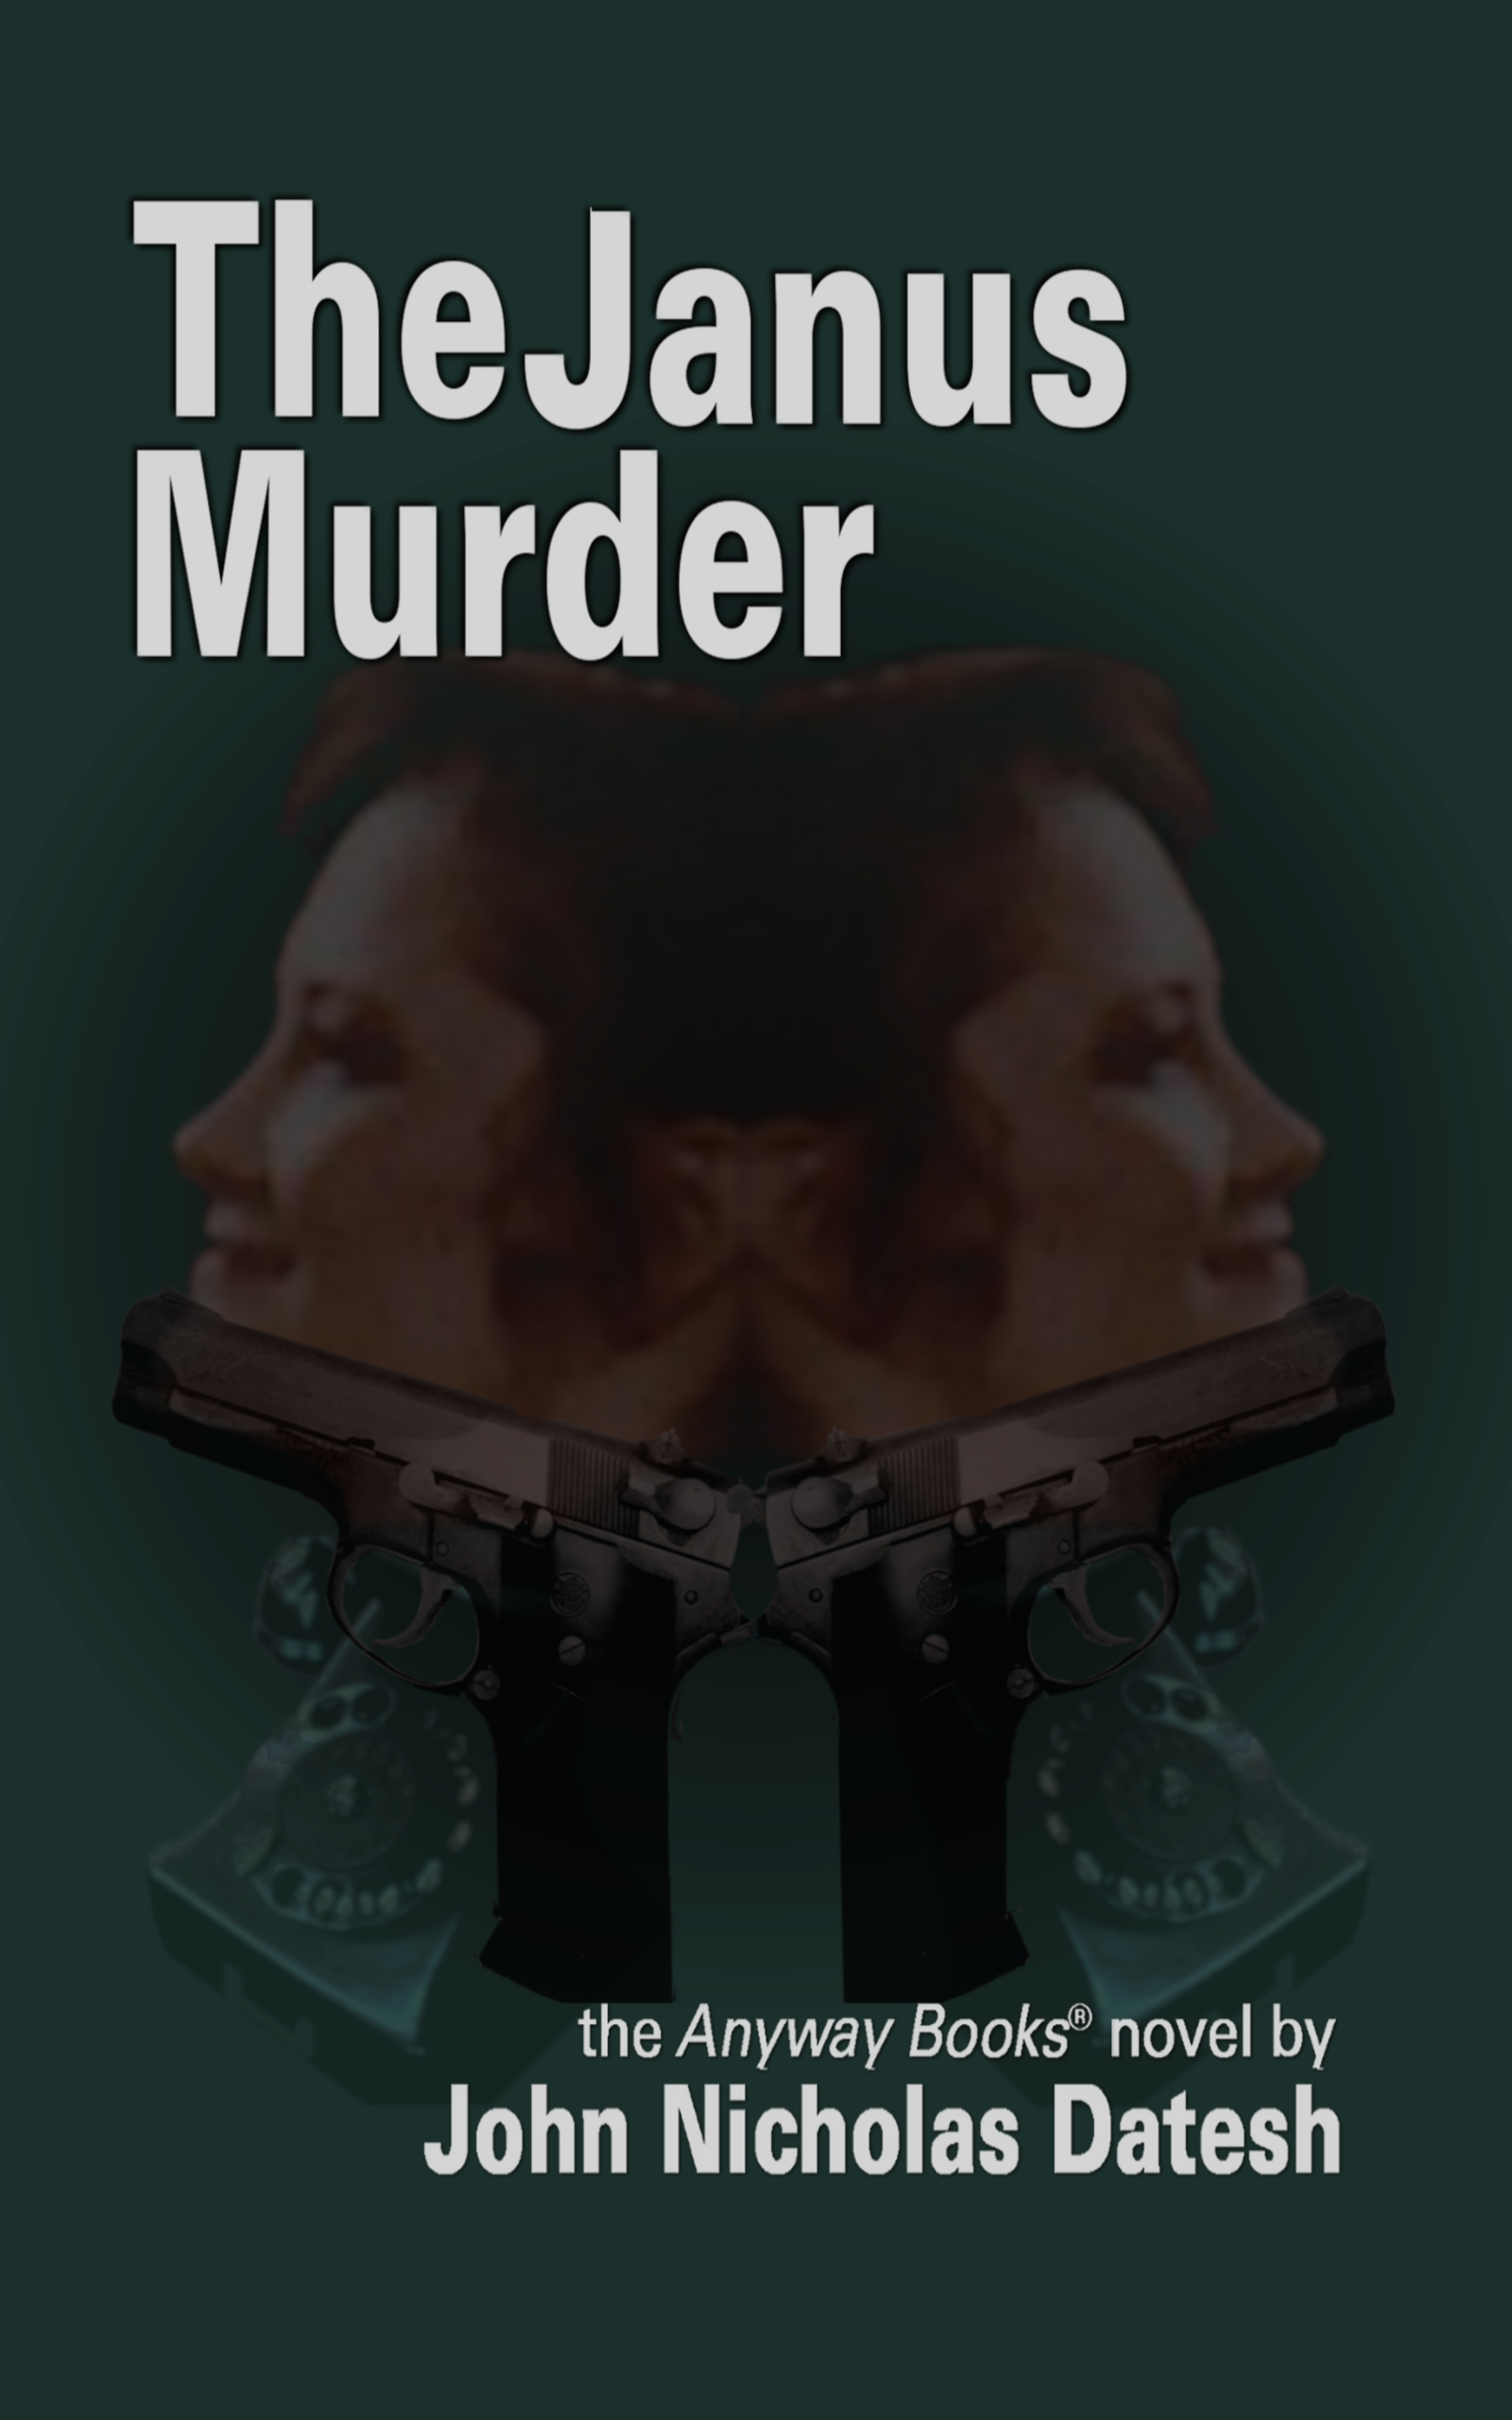 The Janus Murder